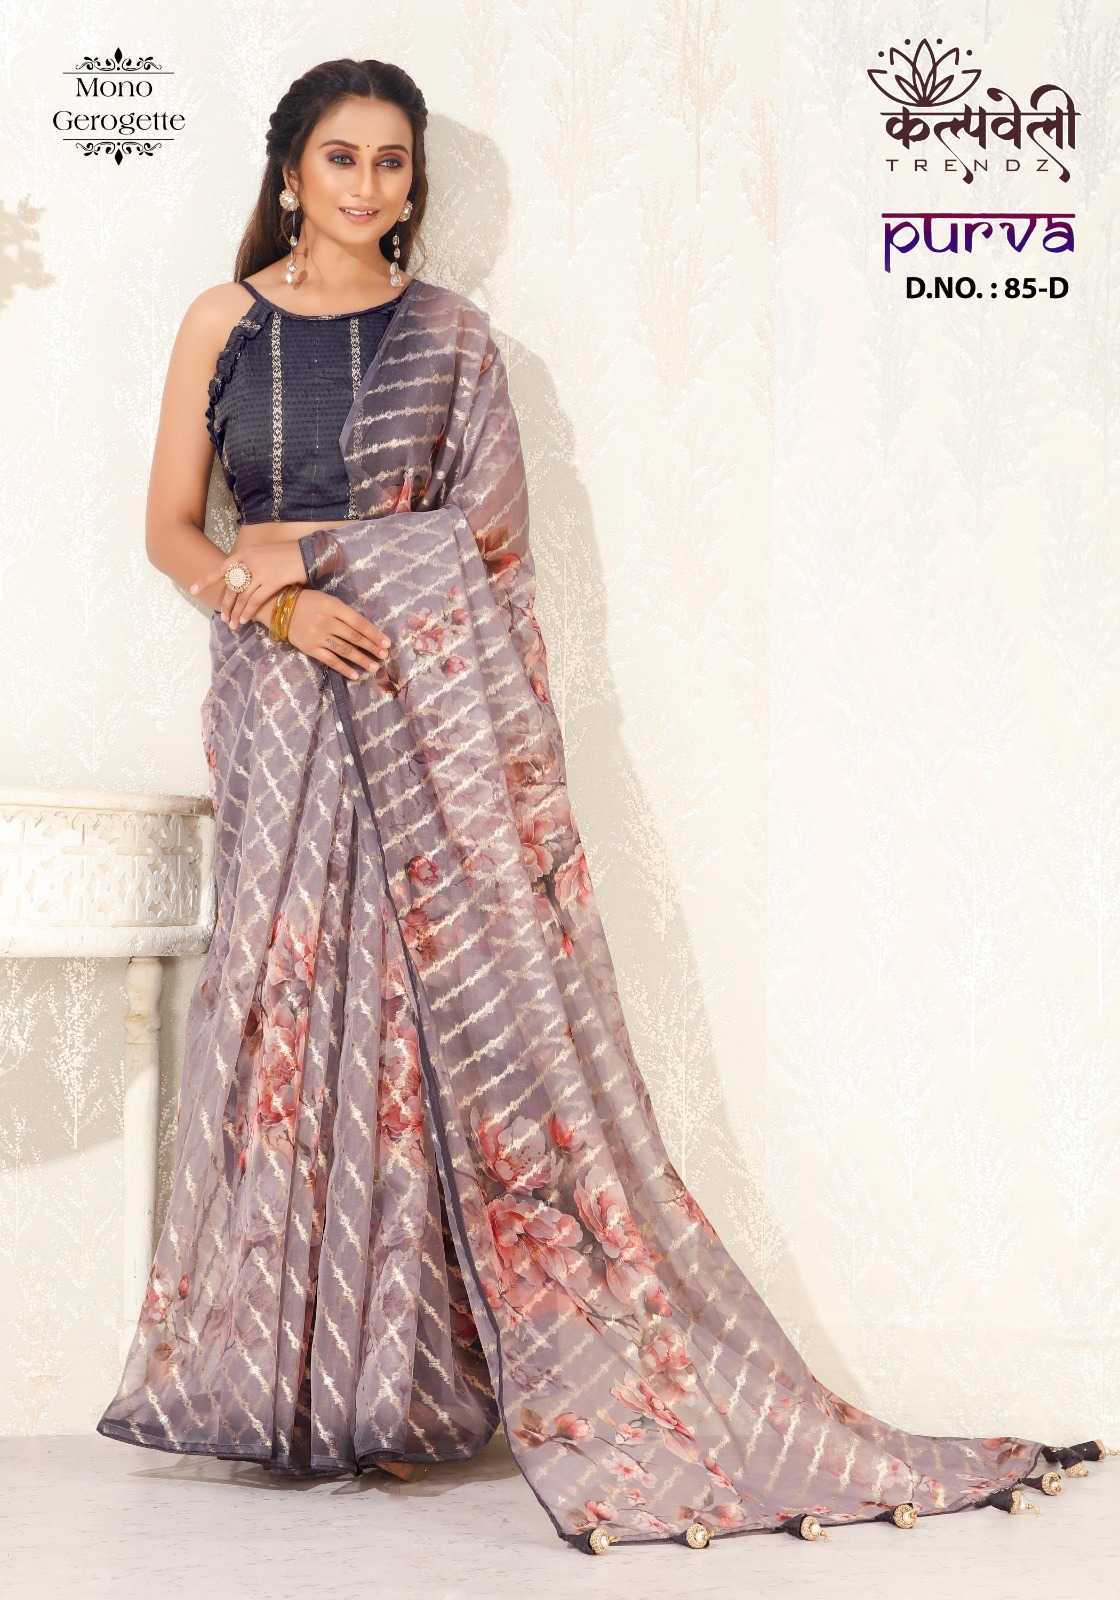 kalpavelly trendz purva 85 beautiful flower print fancy saree catalog